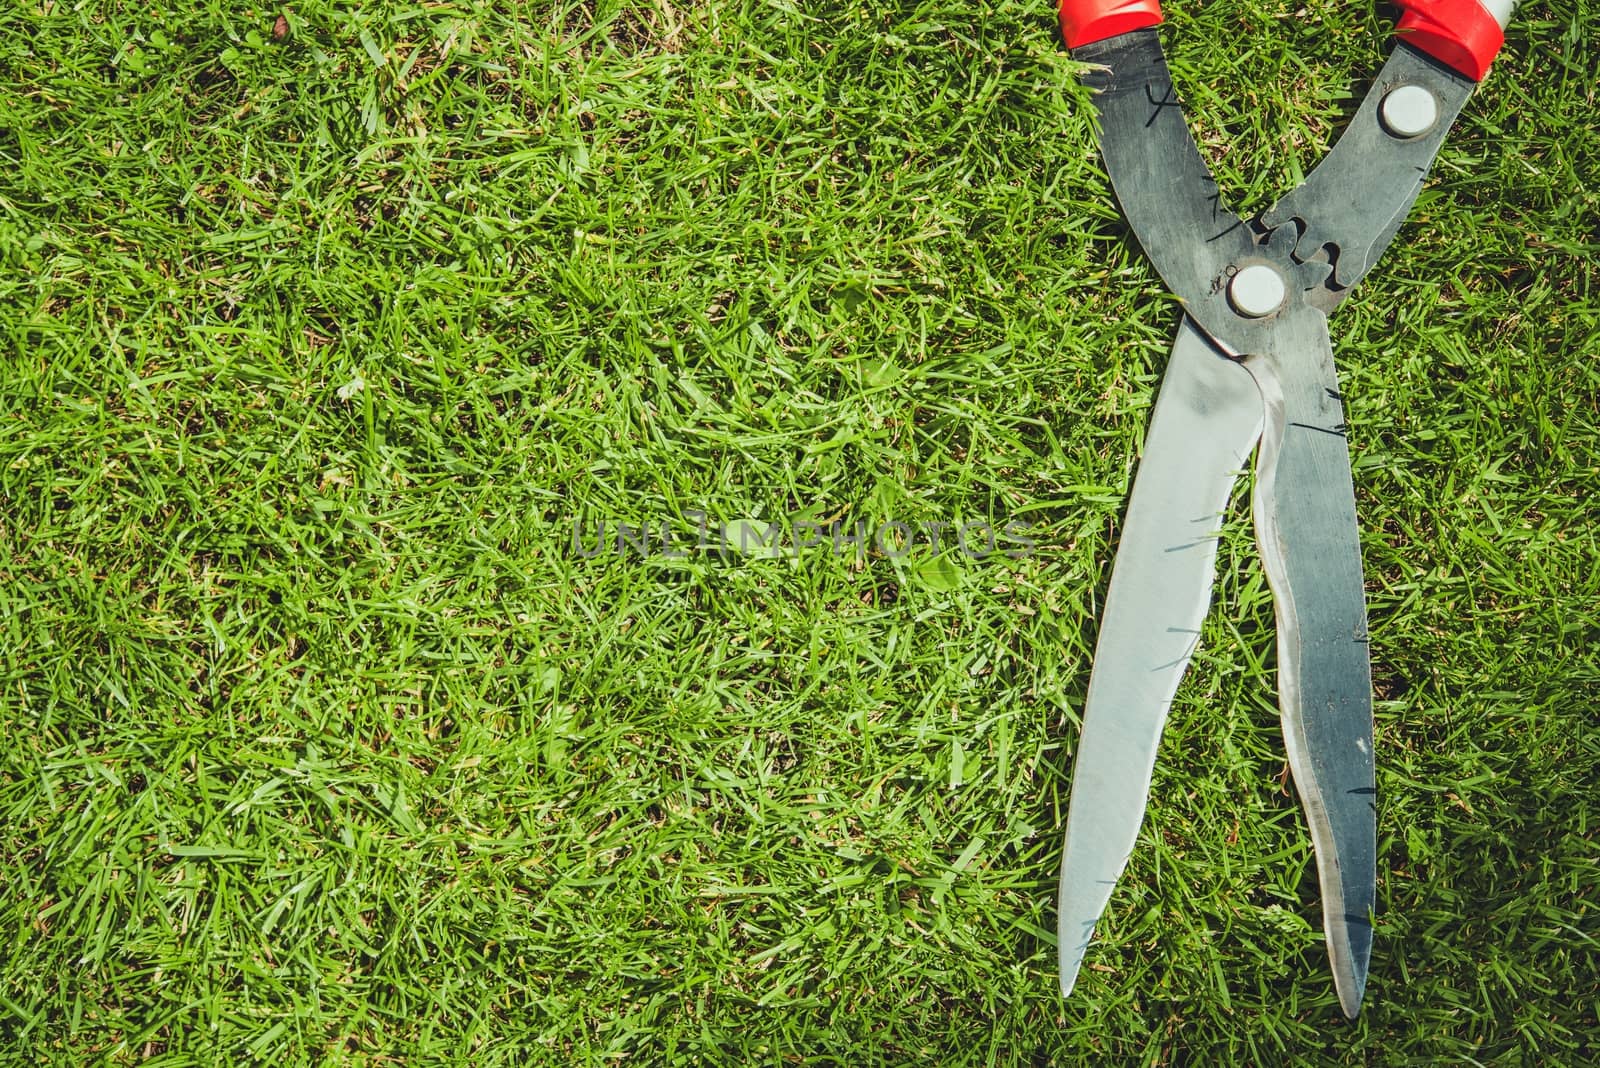 Garden Scissors on the Grassy Background. Closeup Photo. Gardening Theme.